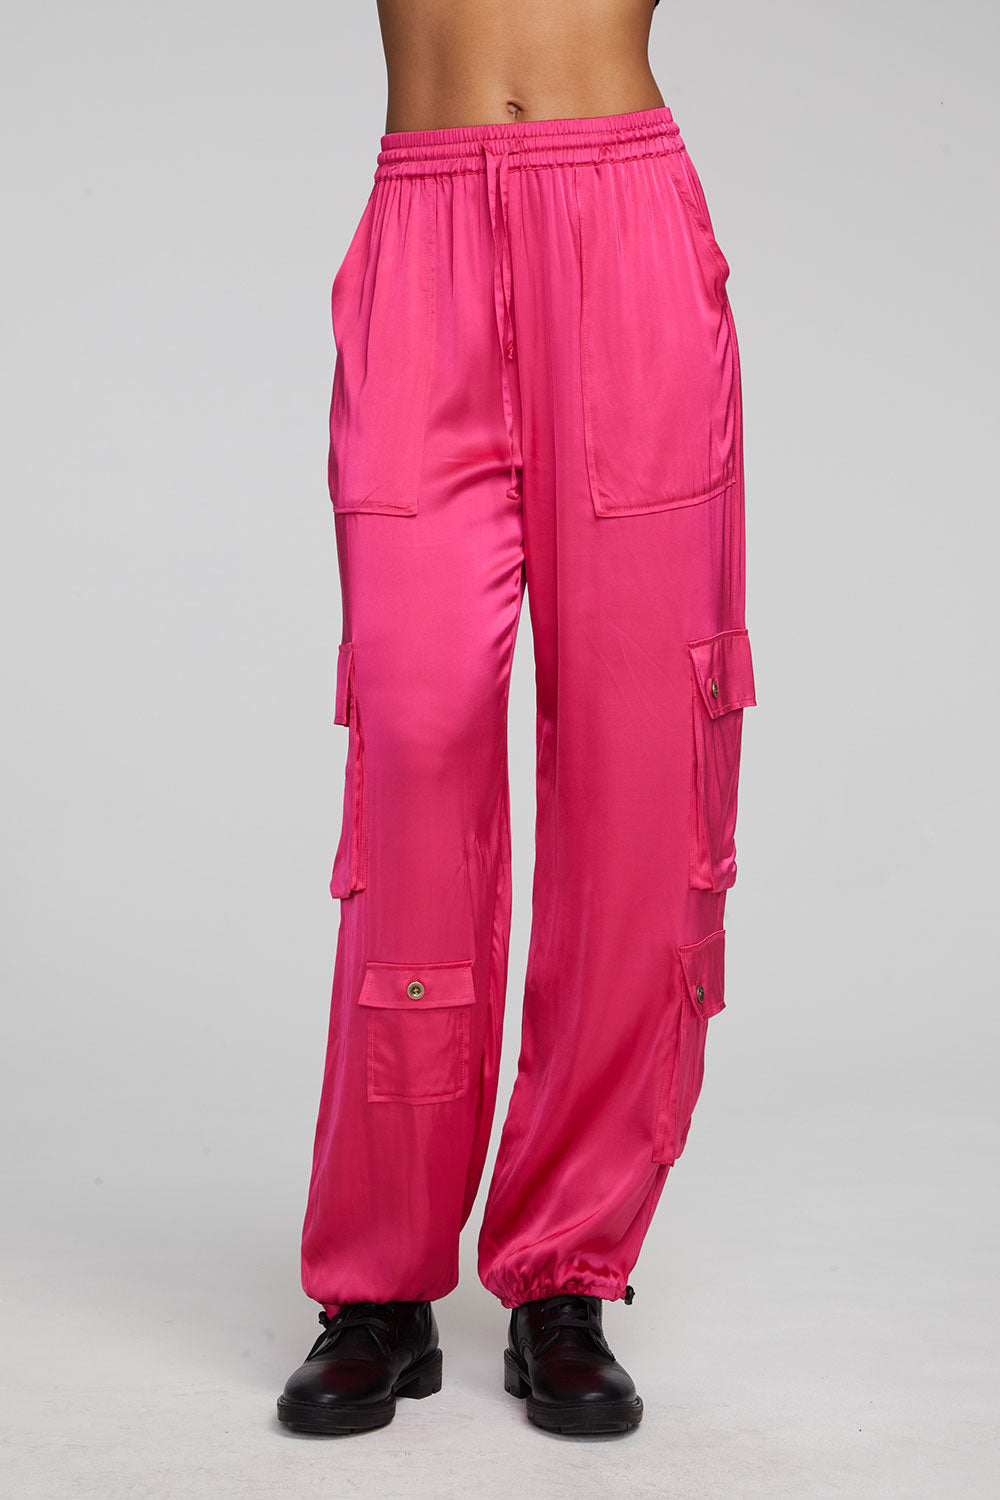 Regatta pink slacks, Women's Fashion, Bottoms, Other Bottoms on Carousell